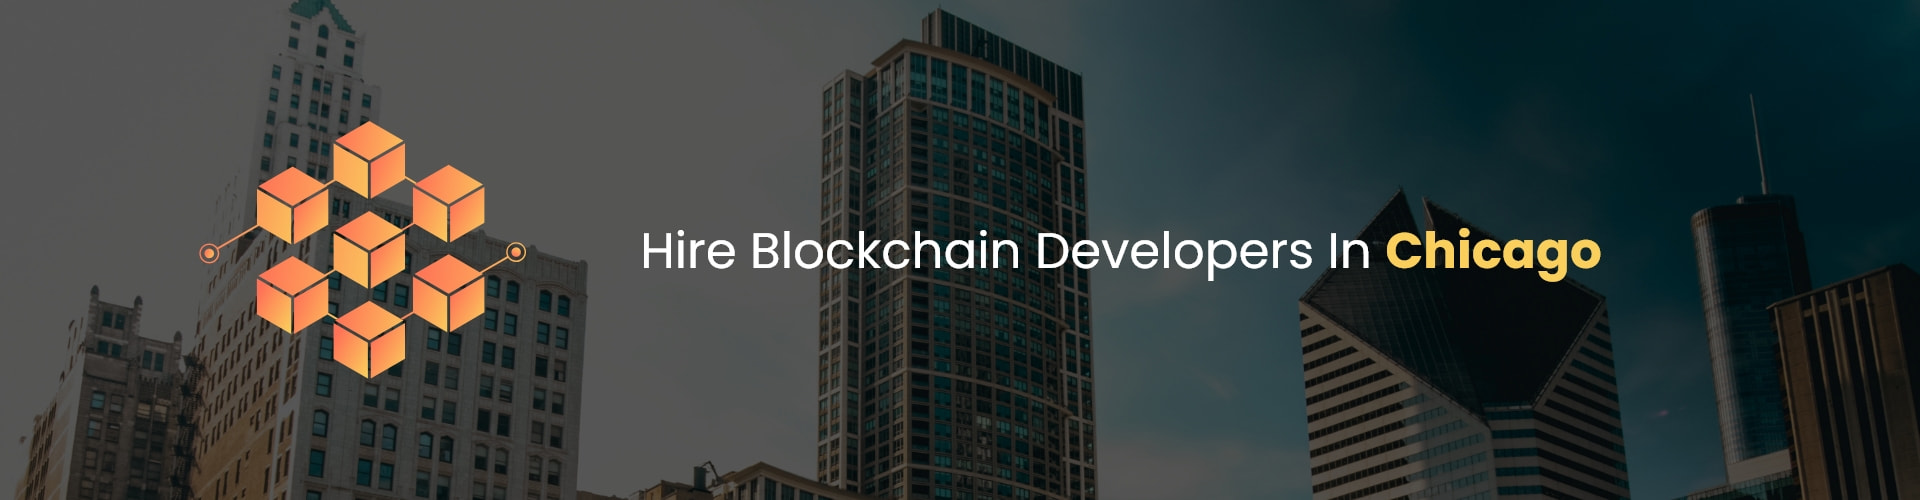 hire blockchain developers in chicago